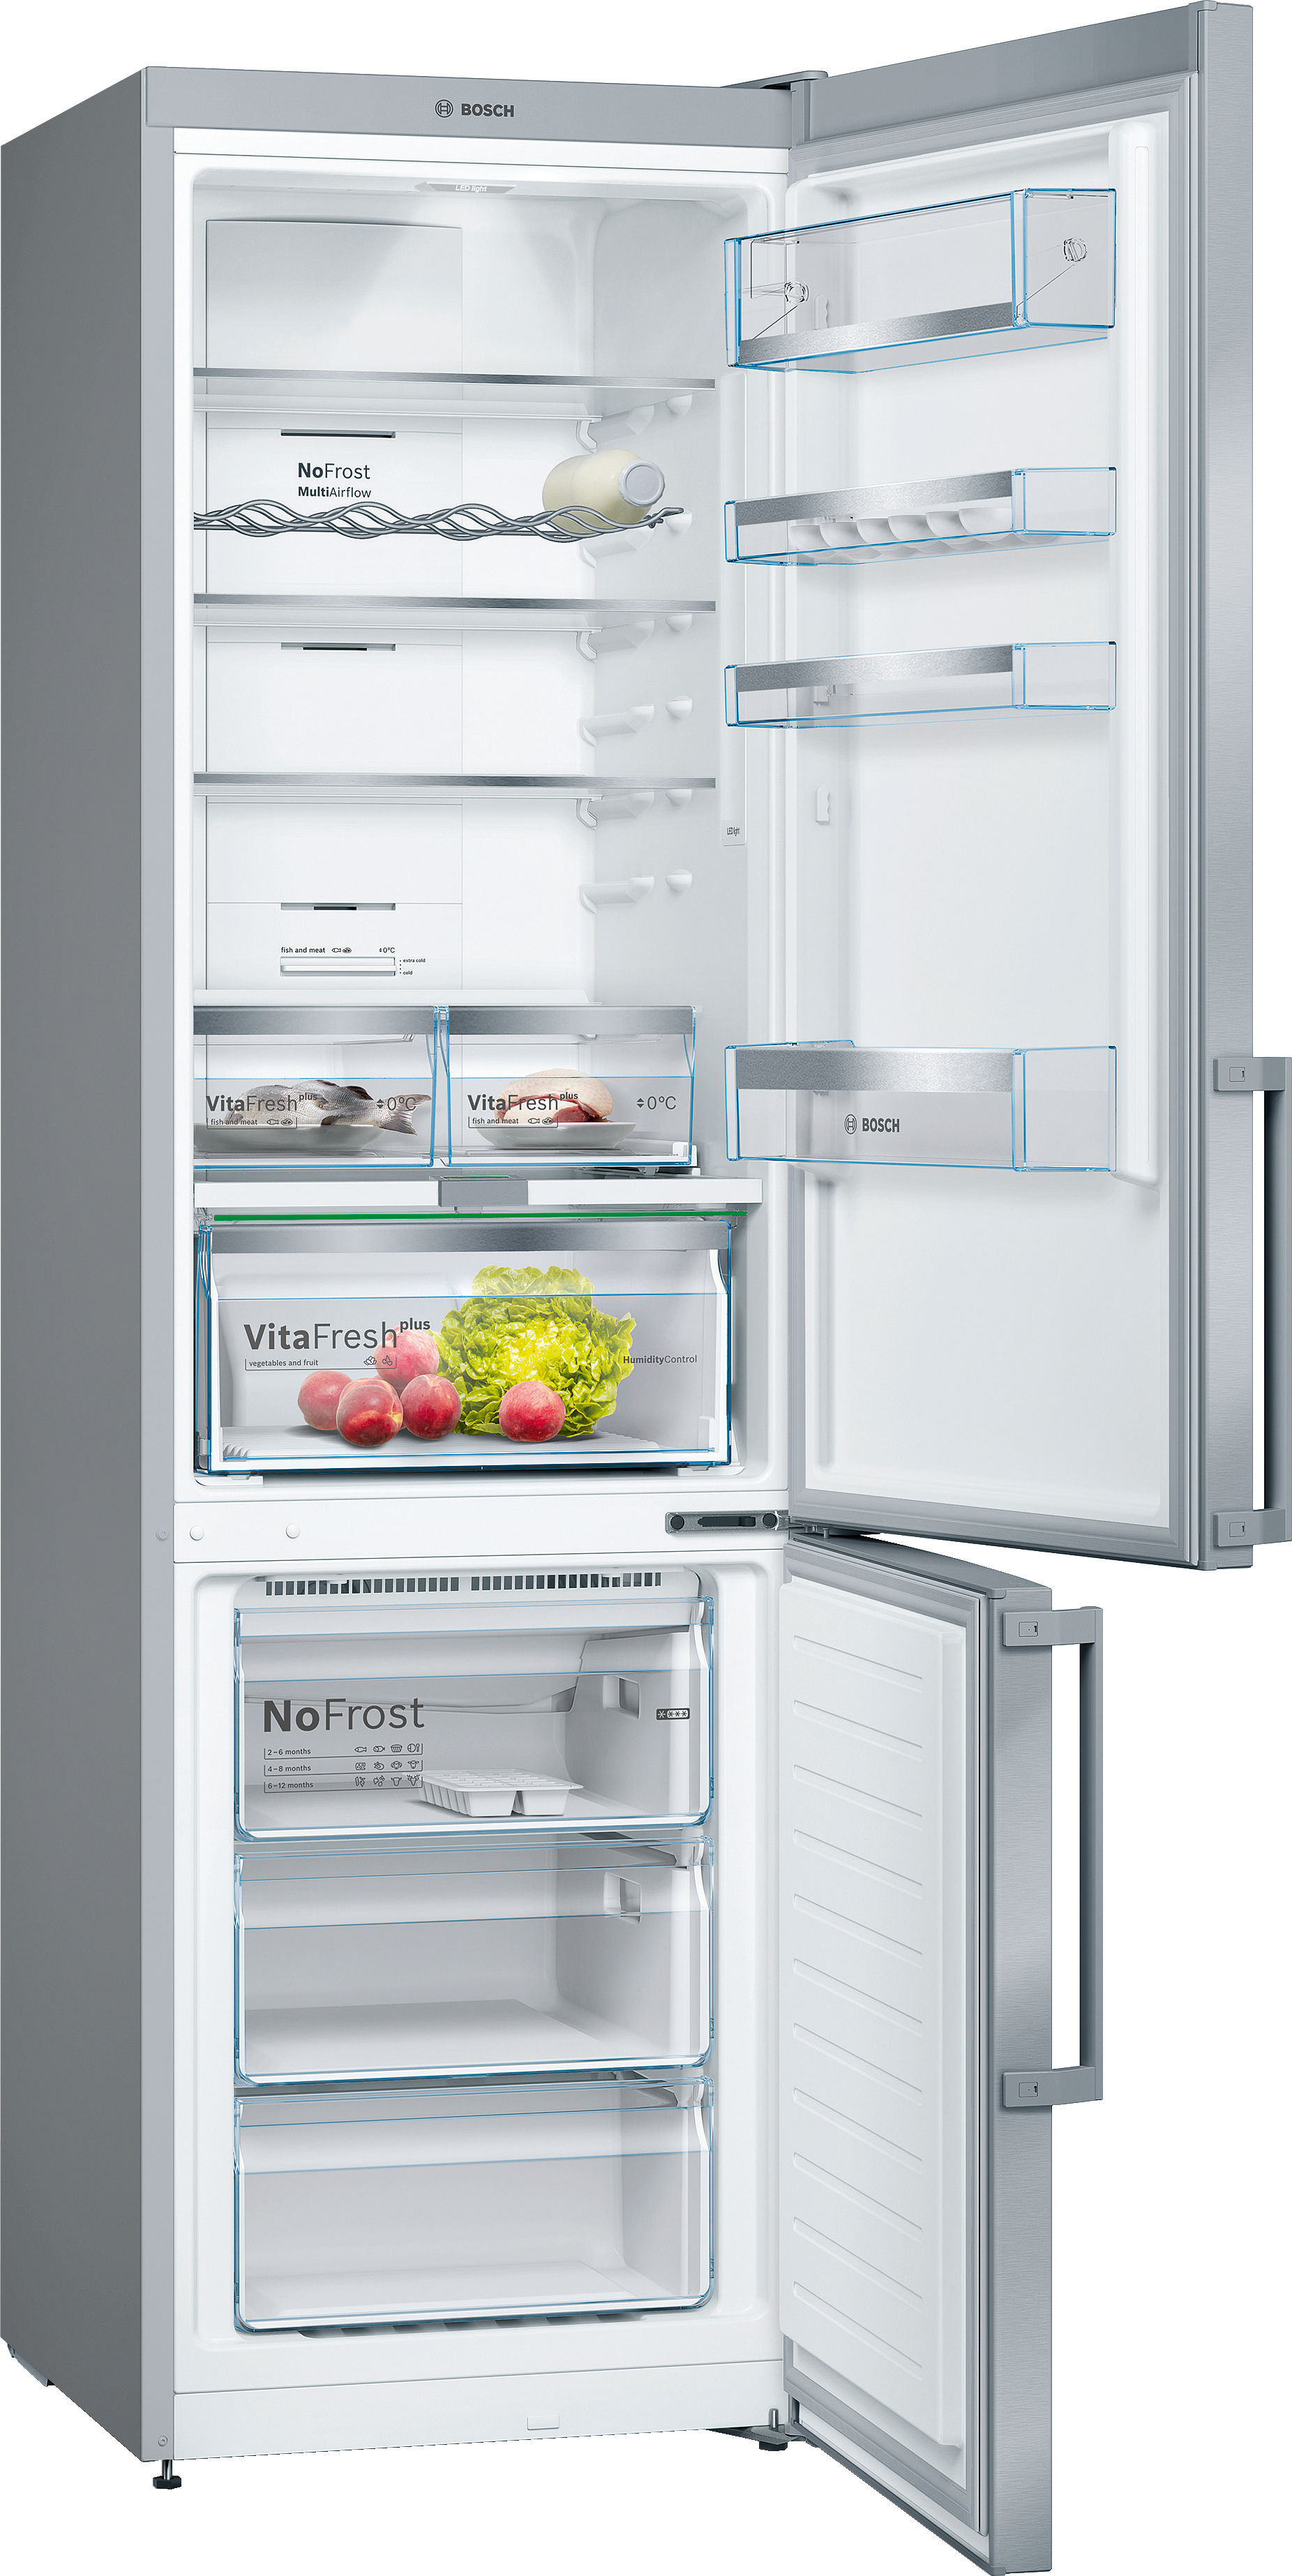 Compra oferta de Bosch KGN39AIDP frigorífico combi clase a+++ 203x60 no  frost acero inoxidab